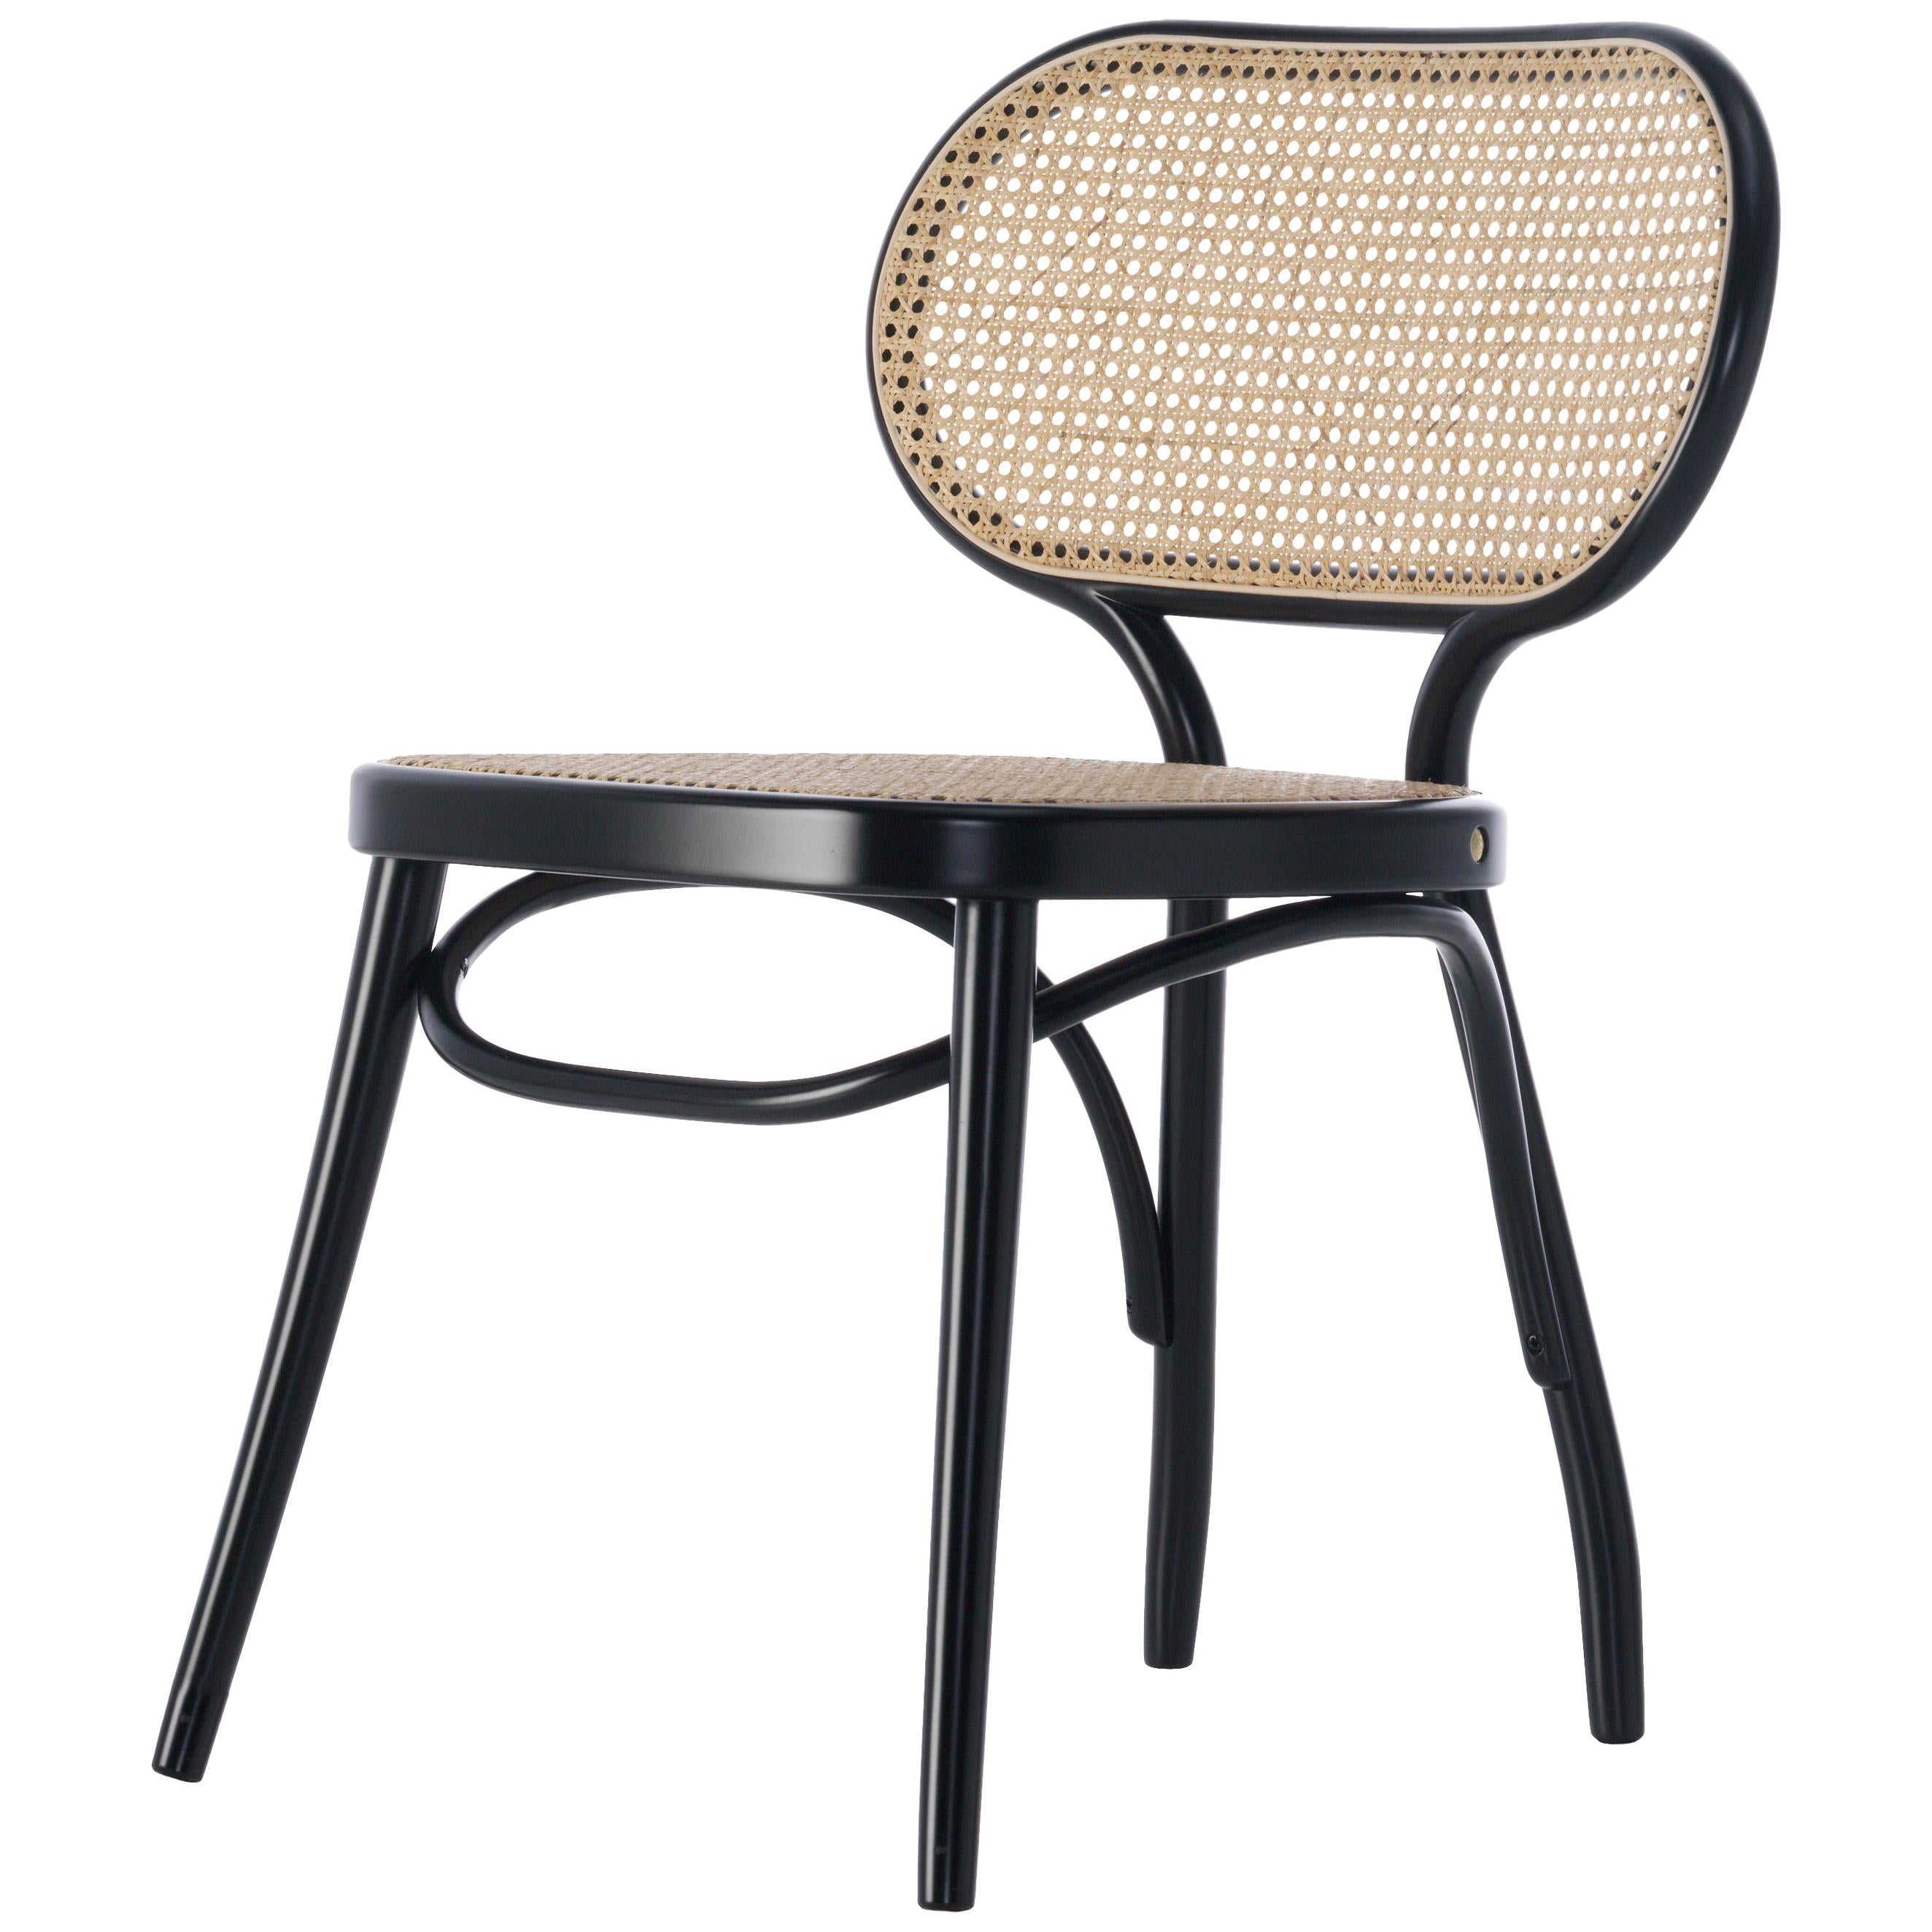 Gebrüder Thonet Vienna GmbH Bodystuhl Chair in Black with Woven Cane Seat For Sale